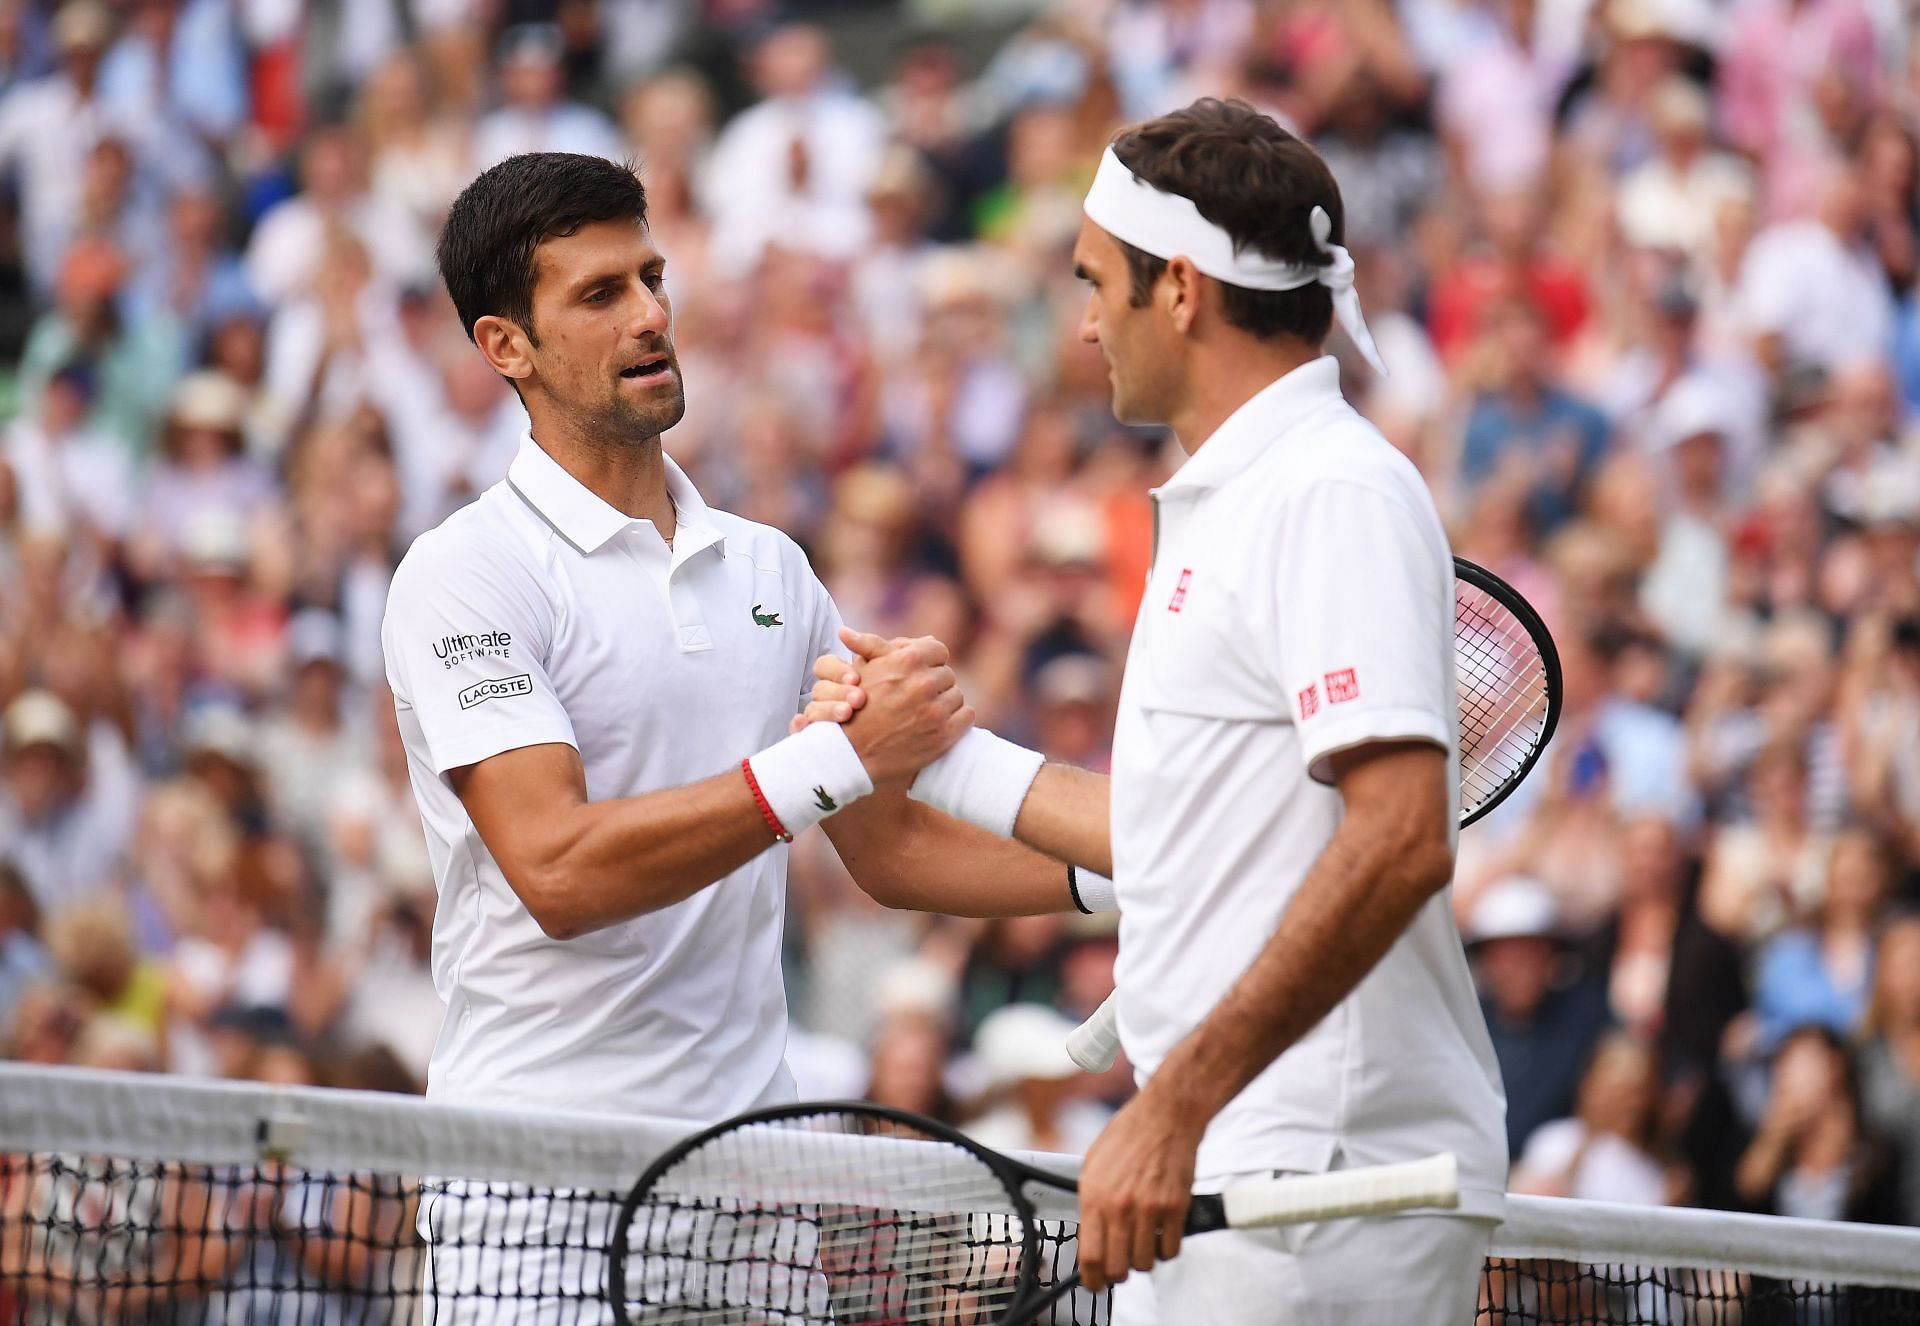 Roger Federer and Novak Djokovic at Wimbledon 2019